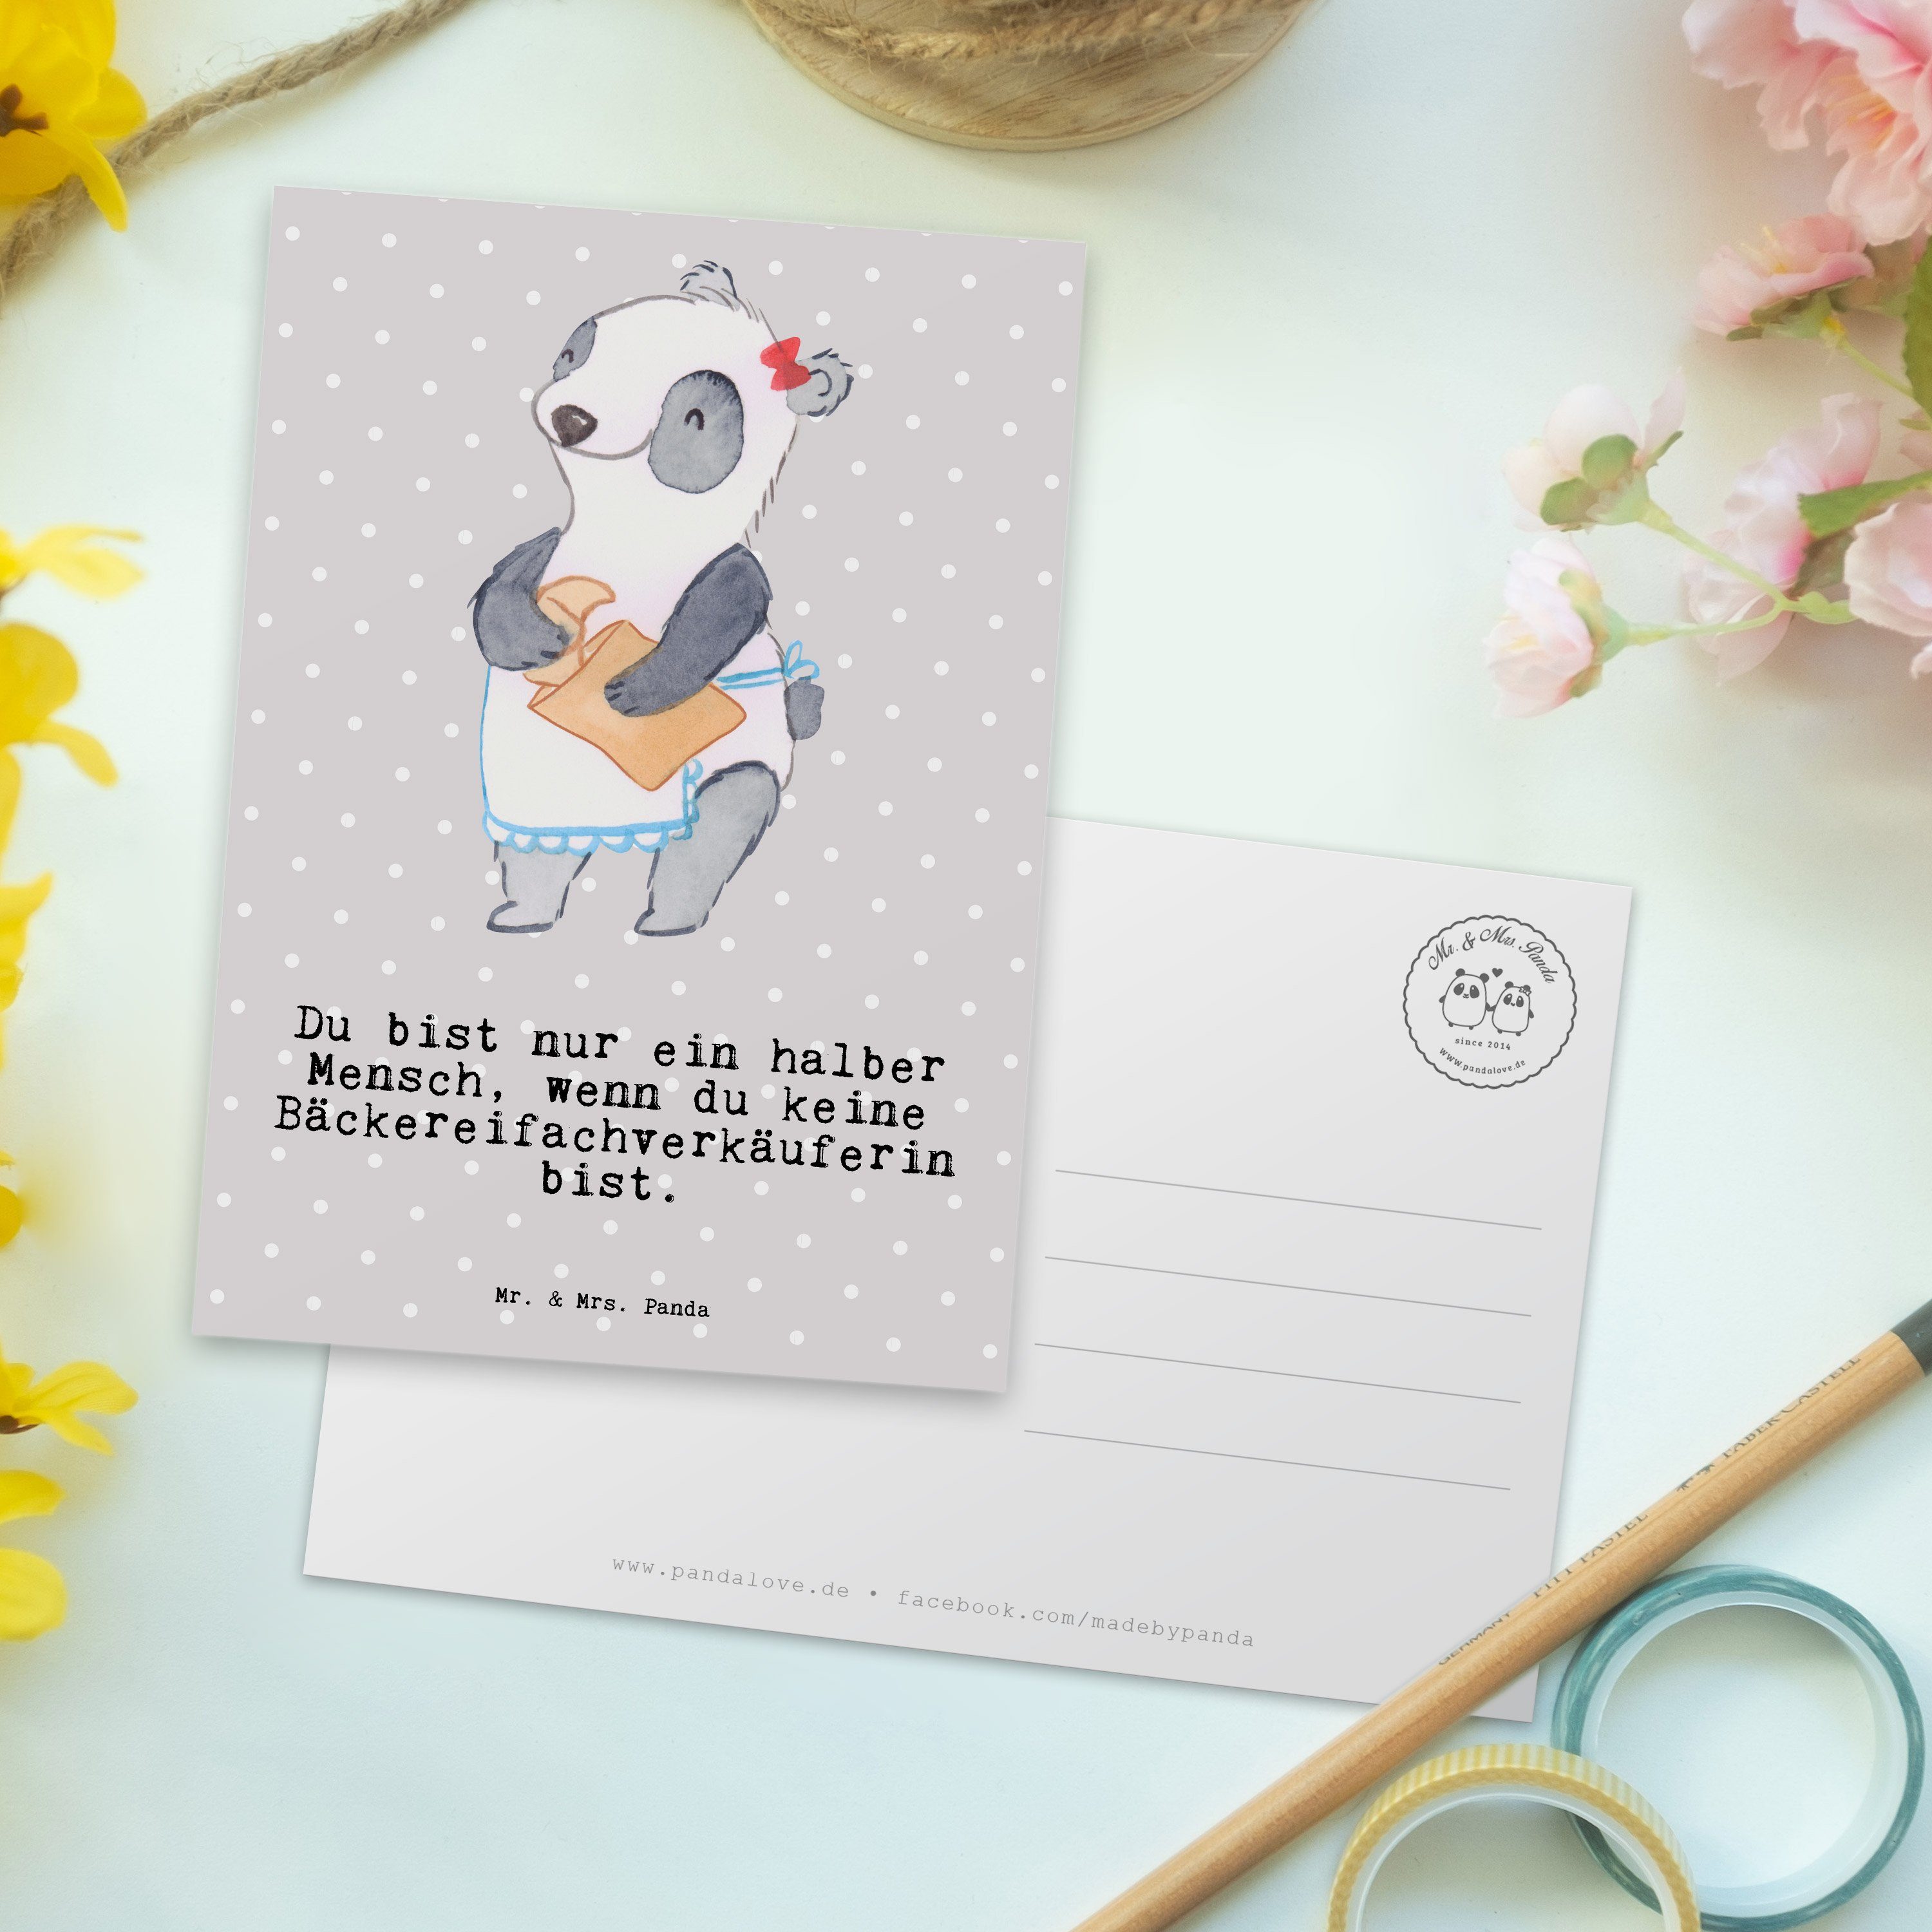 Mr. & Mrs. Panda Postkarte Herz - Pastell mit Grau - Bäckereifachverkäuferin Geschenk, Backstube